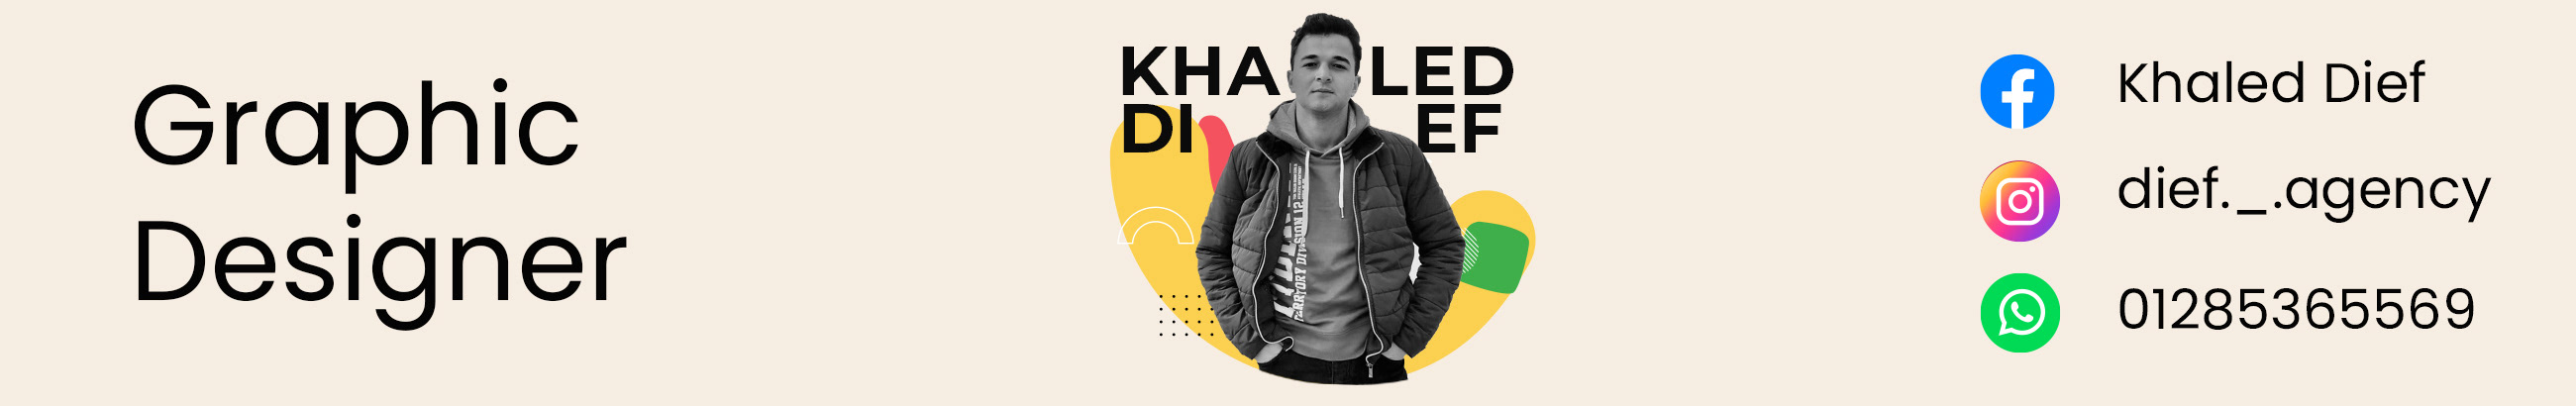 Khaled Dief's profile banner